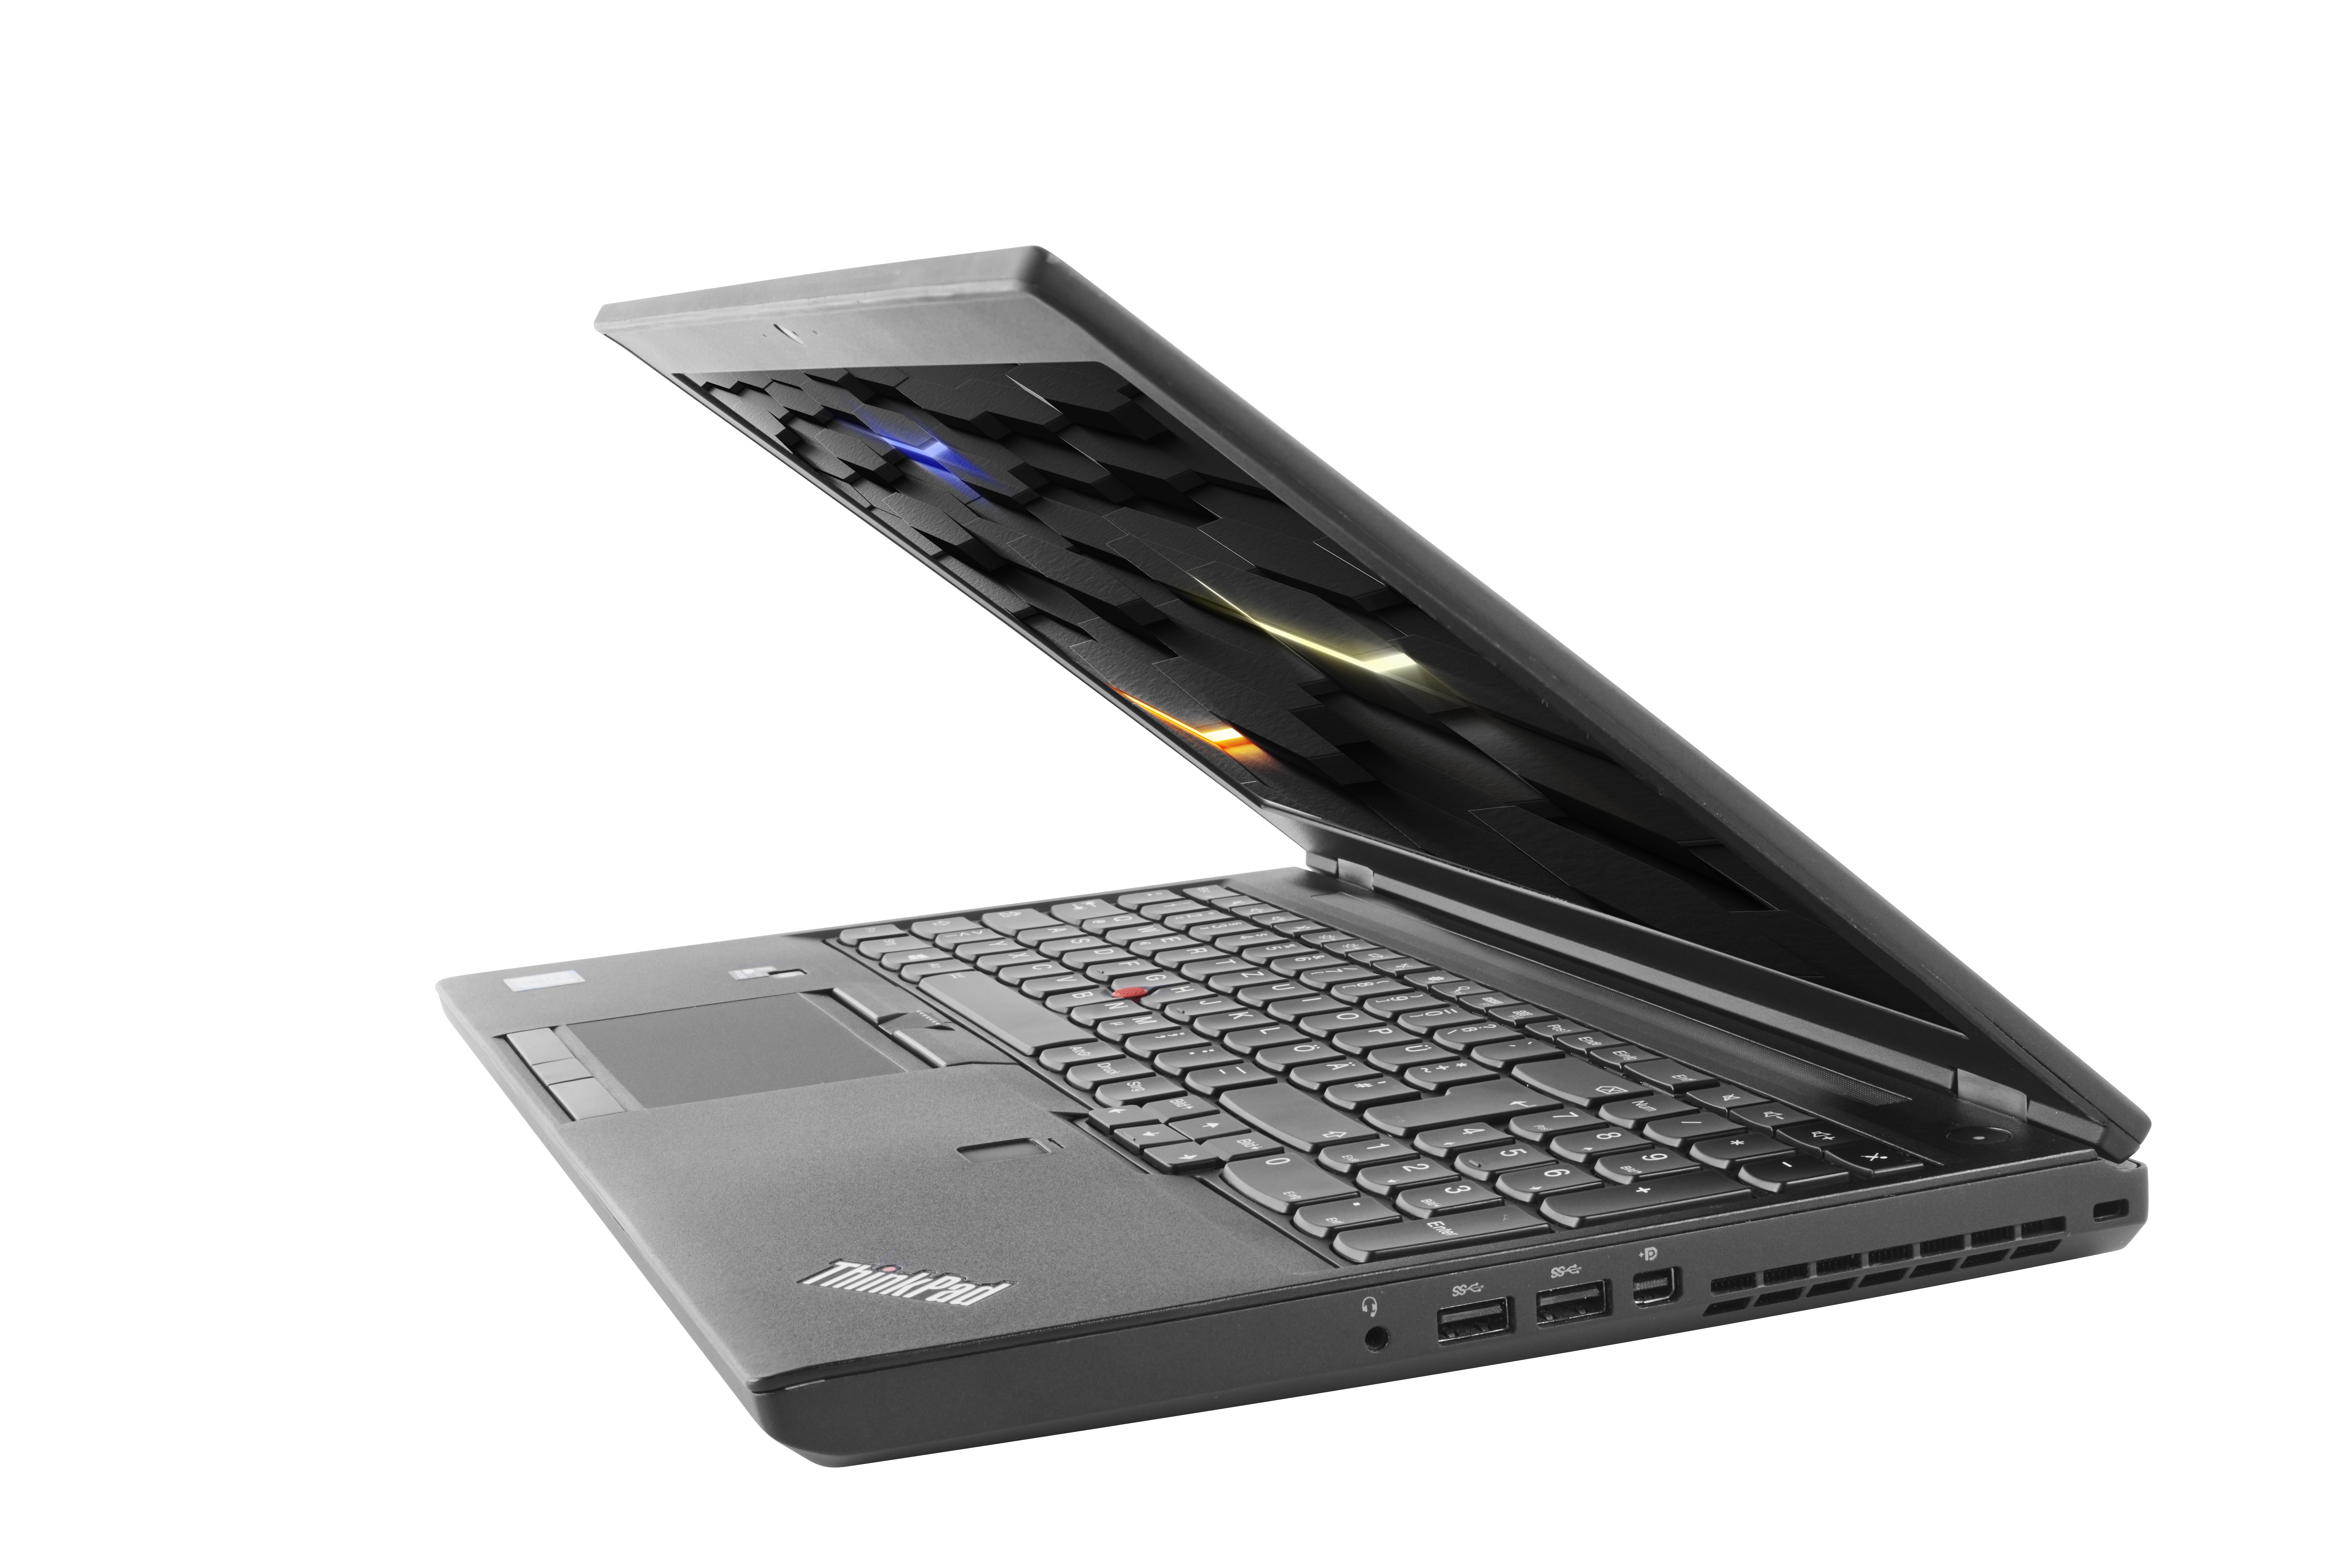 Lenovo ThinkPad P50, i7, 15.6" Full-HD IPS, 32GB, 250GB SSD + 1TB HDD, Webcam, Windows 10 Pro